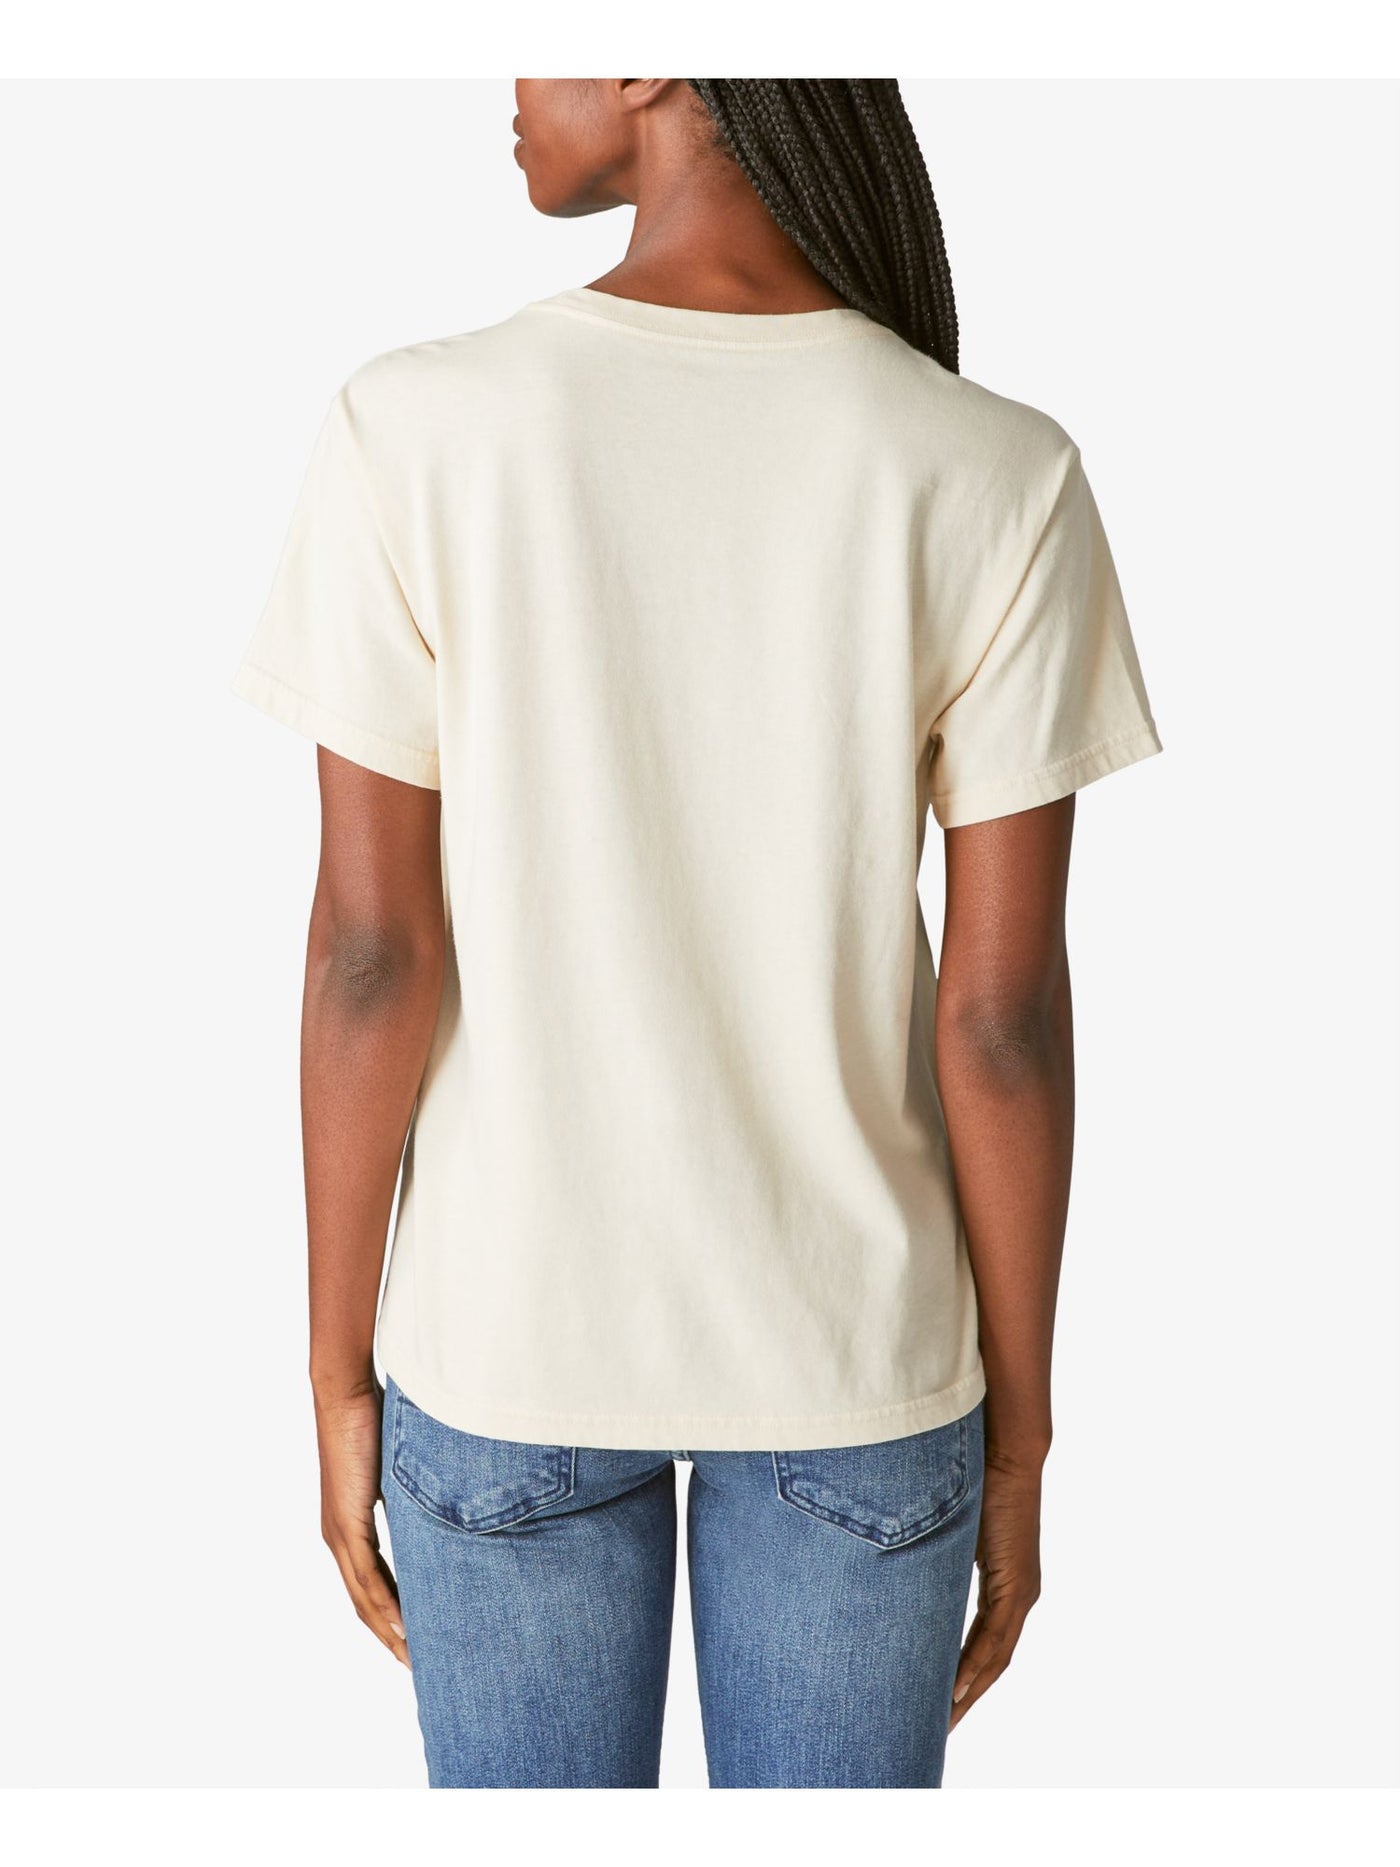 LUCKY BRAND Womens Beige Graphic Short Sleeve Crew Neck T-Shirt S